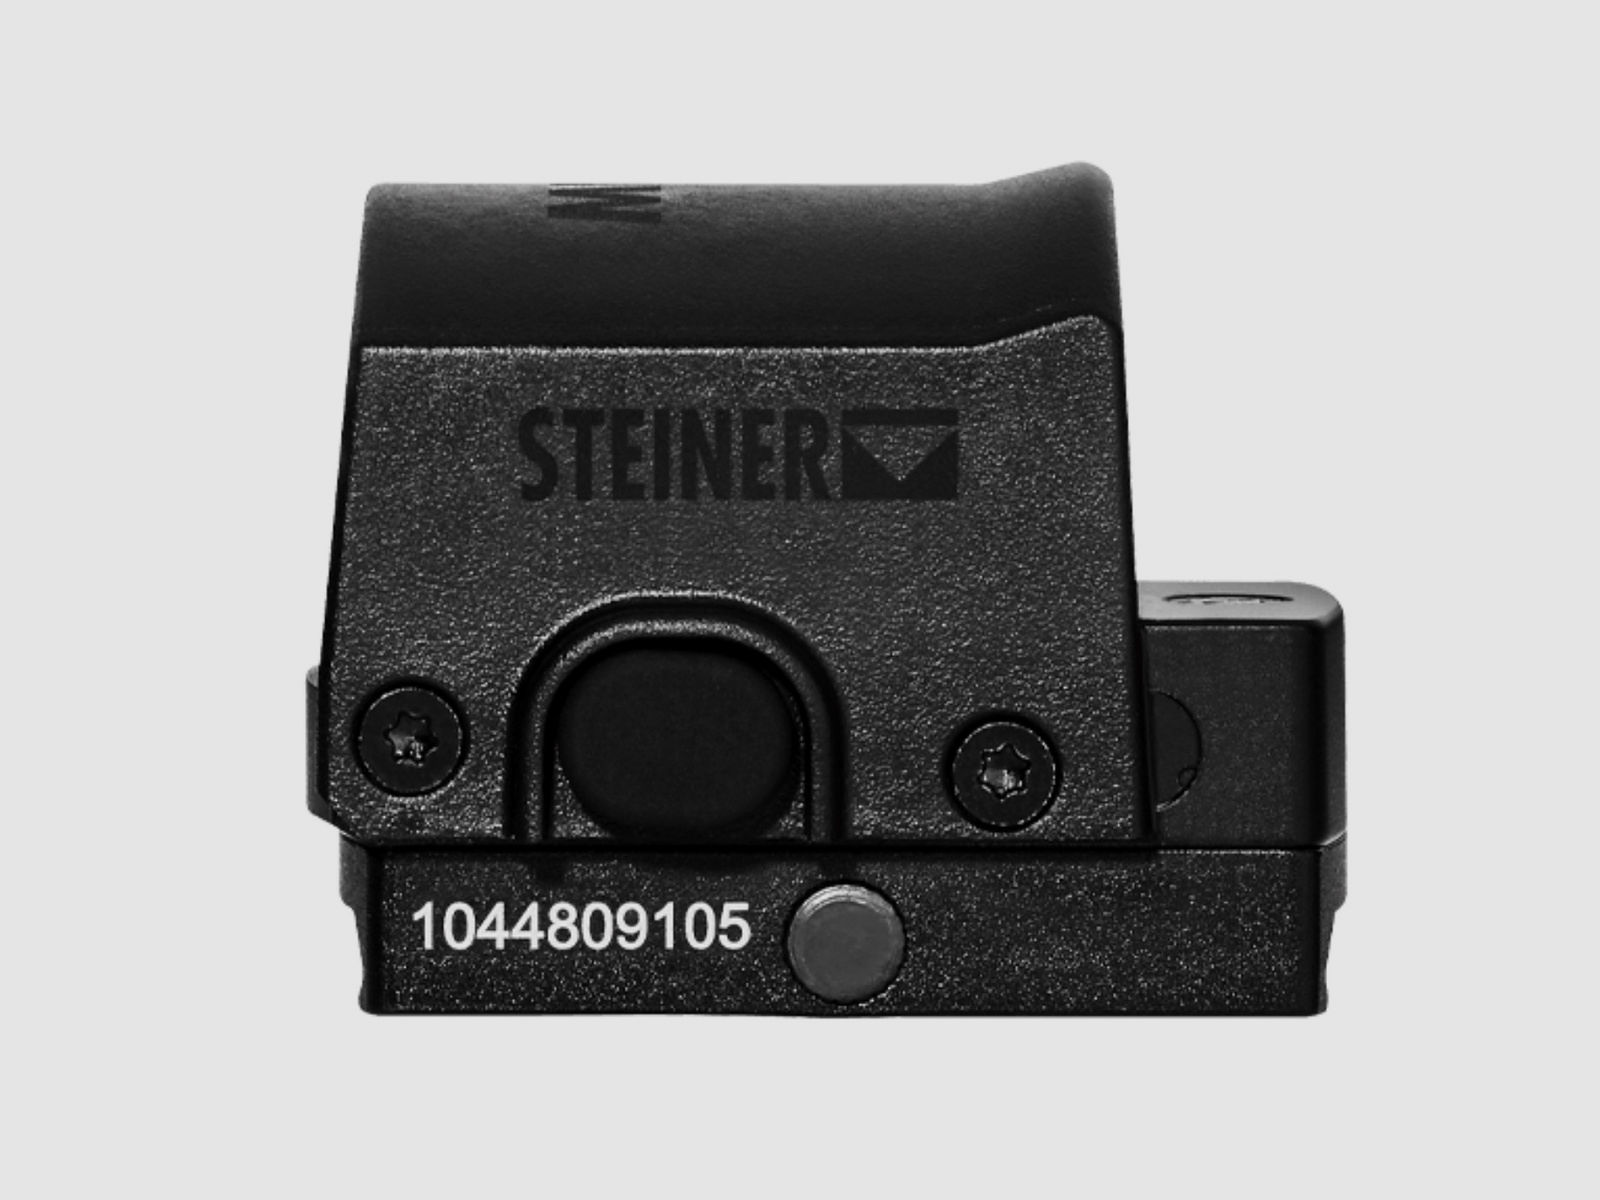 Steiner 202508700 Micro Reflex Sight MRS Picatinny